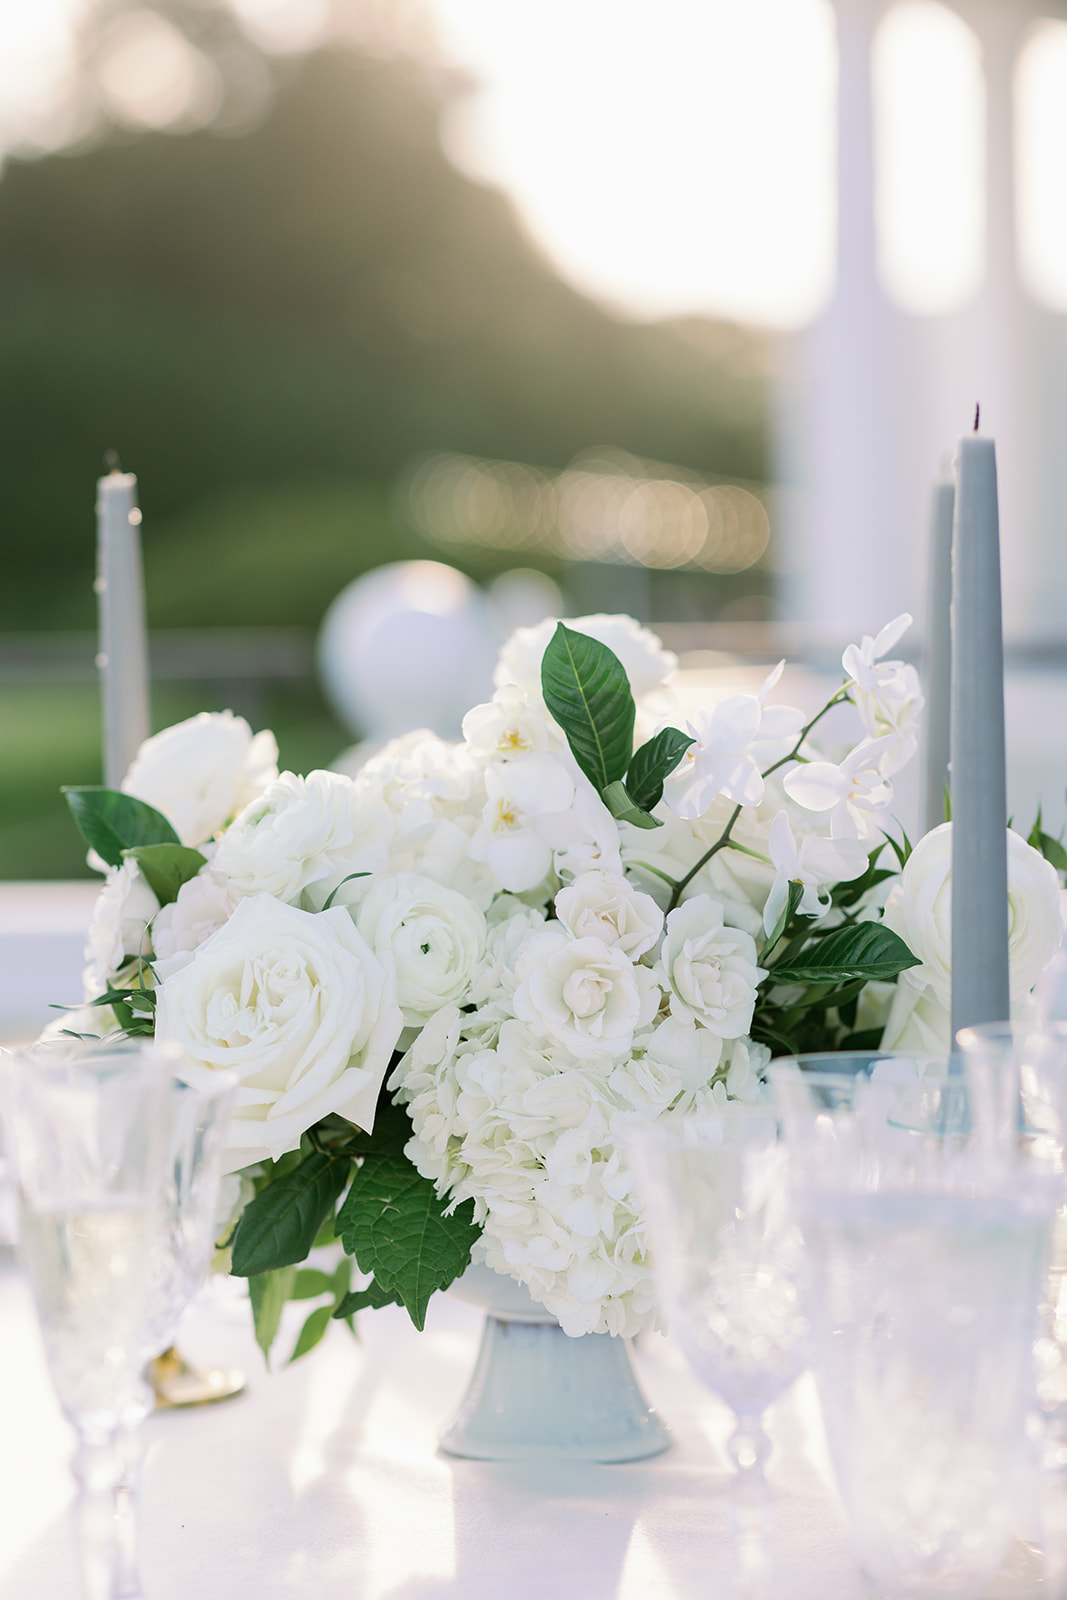 Coastal chic wedding white floral table centerpiece. 